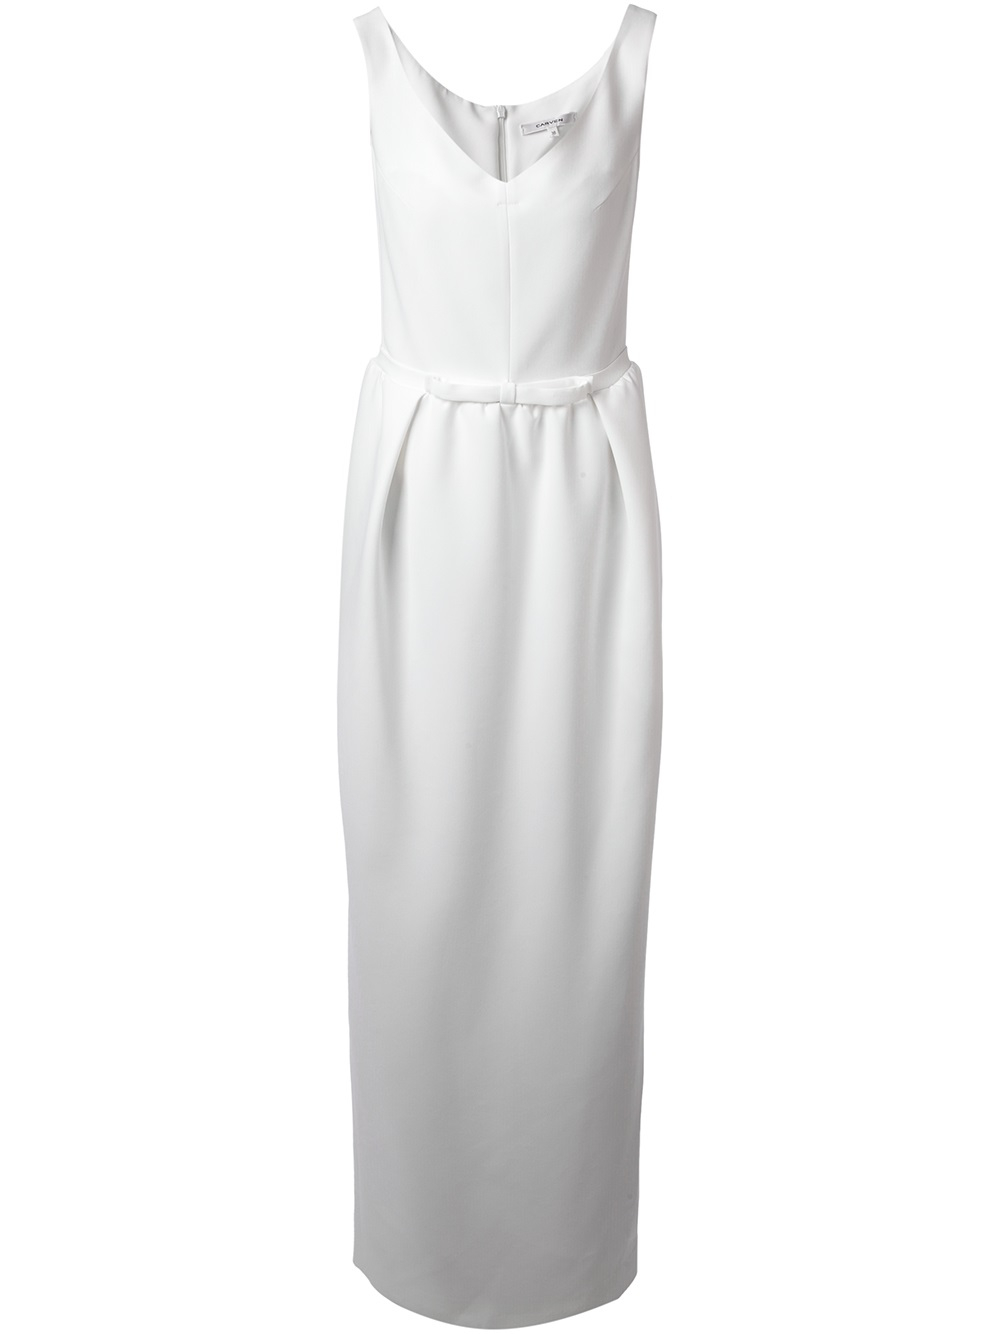 Carven Vneck Maxi Dress in White - Lyst